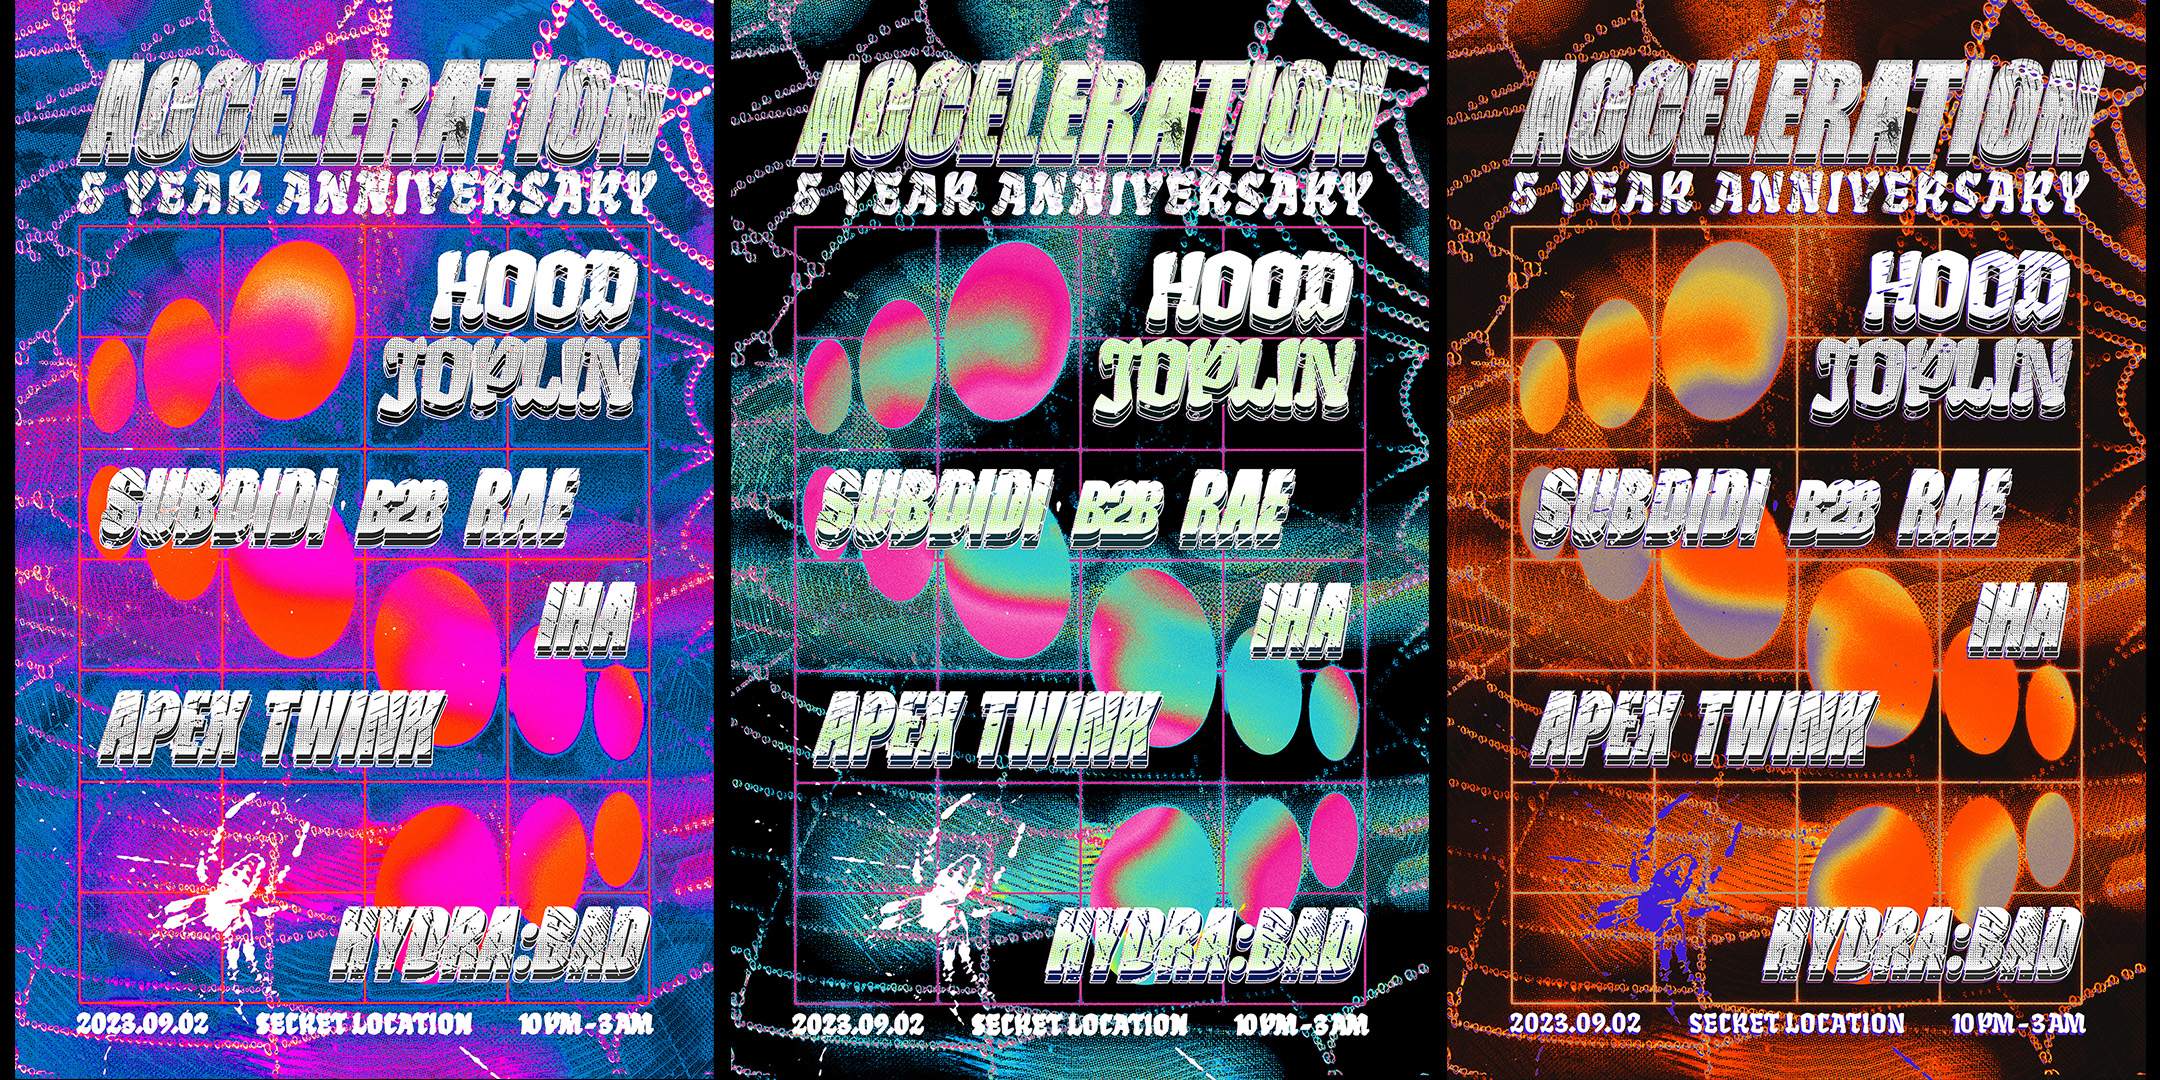 Acceleration - 5 year anniversary: Hood Joplin, Subdidi b2b Rae, IHA, hydra:bad, Apex Twink - フライヤー表